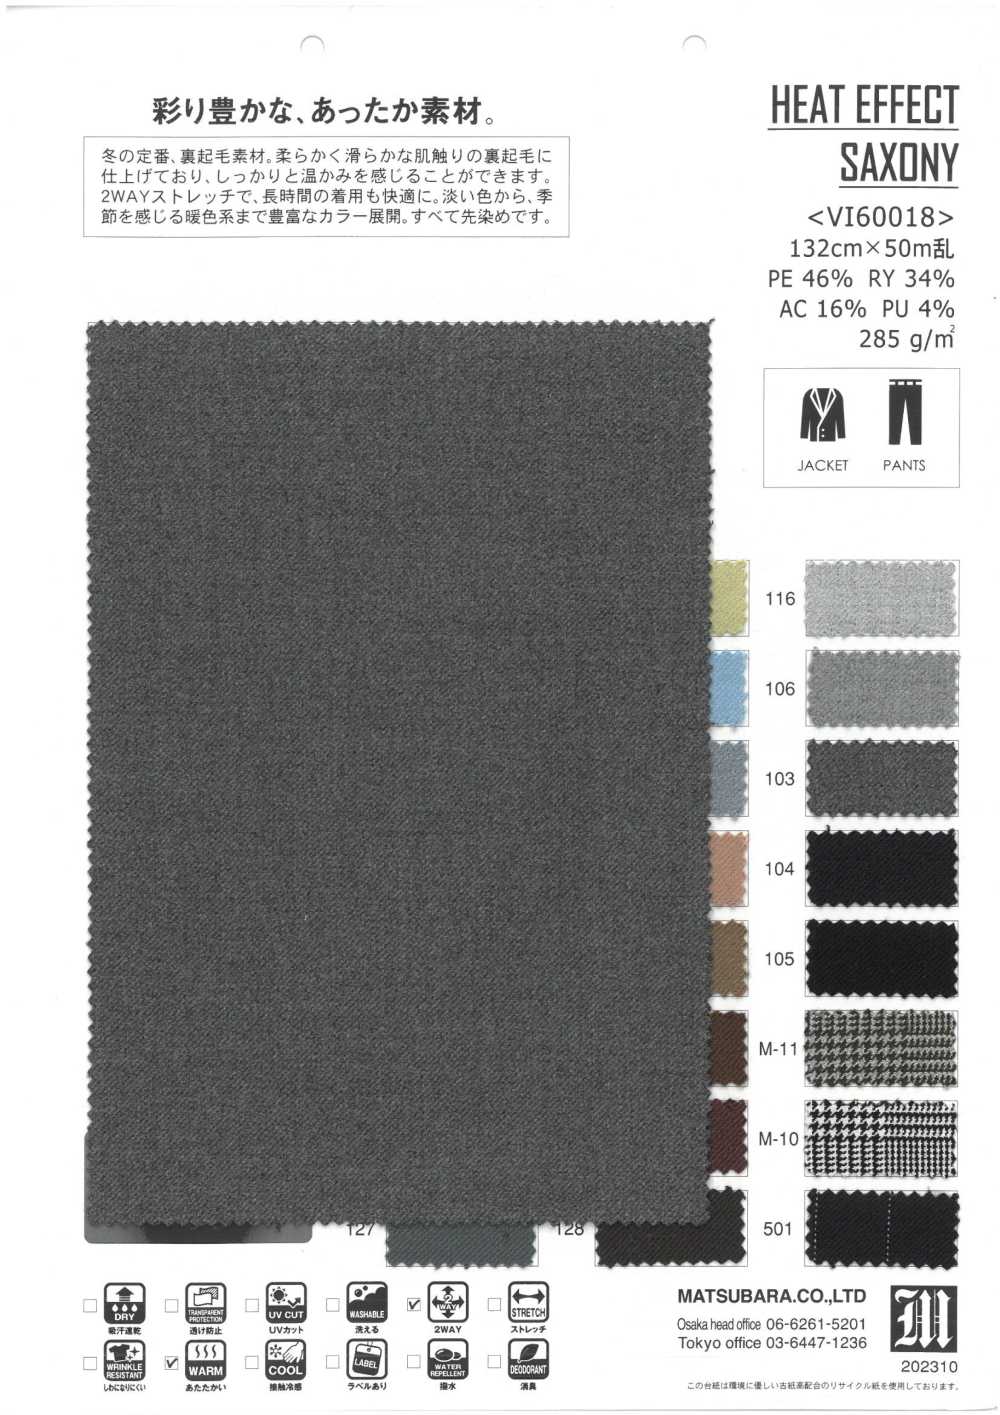 VI60018 WÄRMEEFFEKT SACHSEN[Textilgewebe] Matsubara